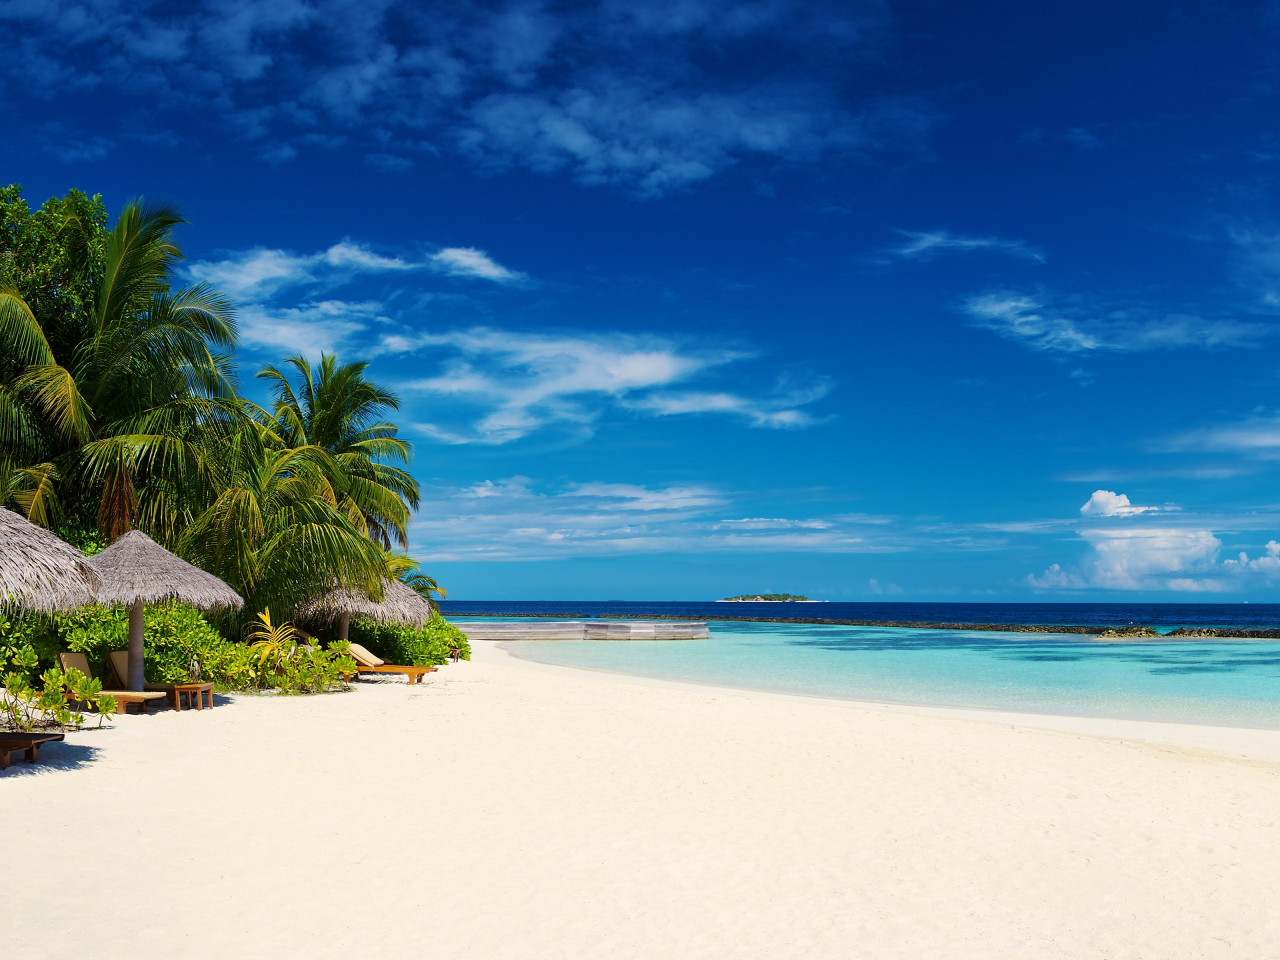 palm trees, побережье, пейзажи, Мальдивские острова, HDR photography, beaches, небо, пляж, пальмы, природа, landscapes, coast, tropical, skies, Maldives, HDR фотографии, nature, sea, тропический, море